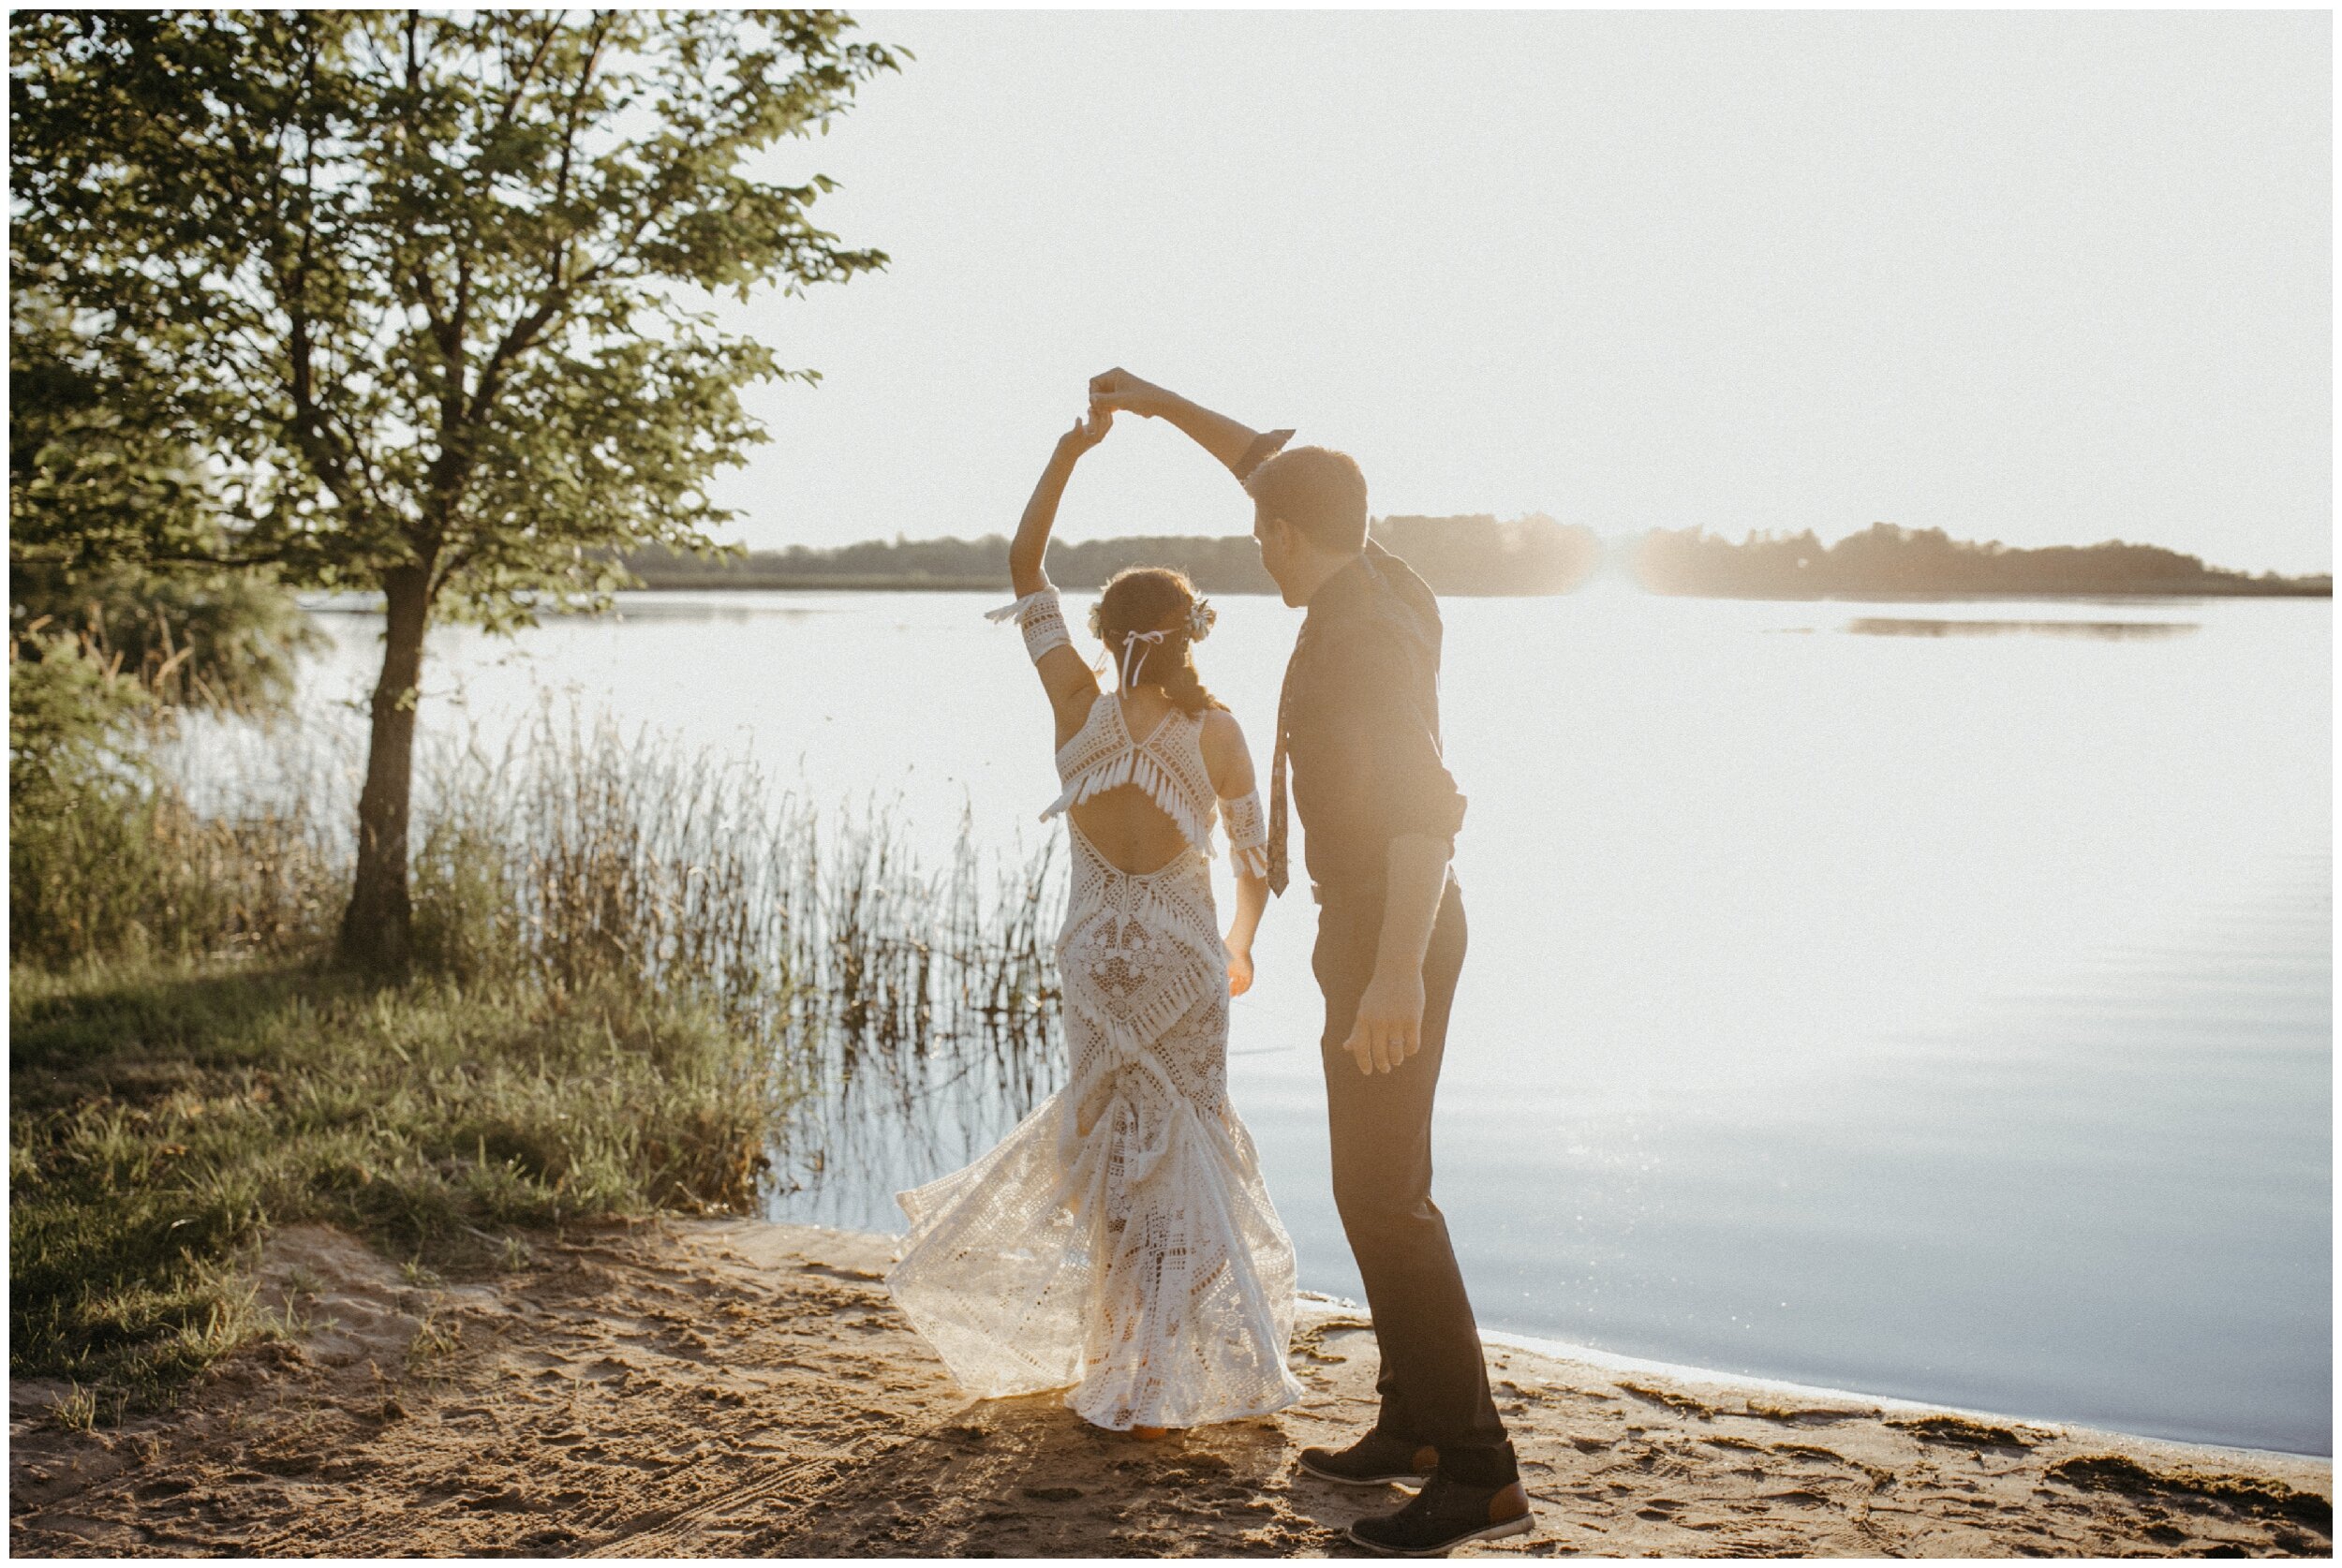 Groom spinning bride on lakeside beach during sunset at their Minnesota summer backyard wedding